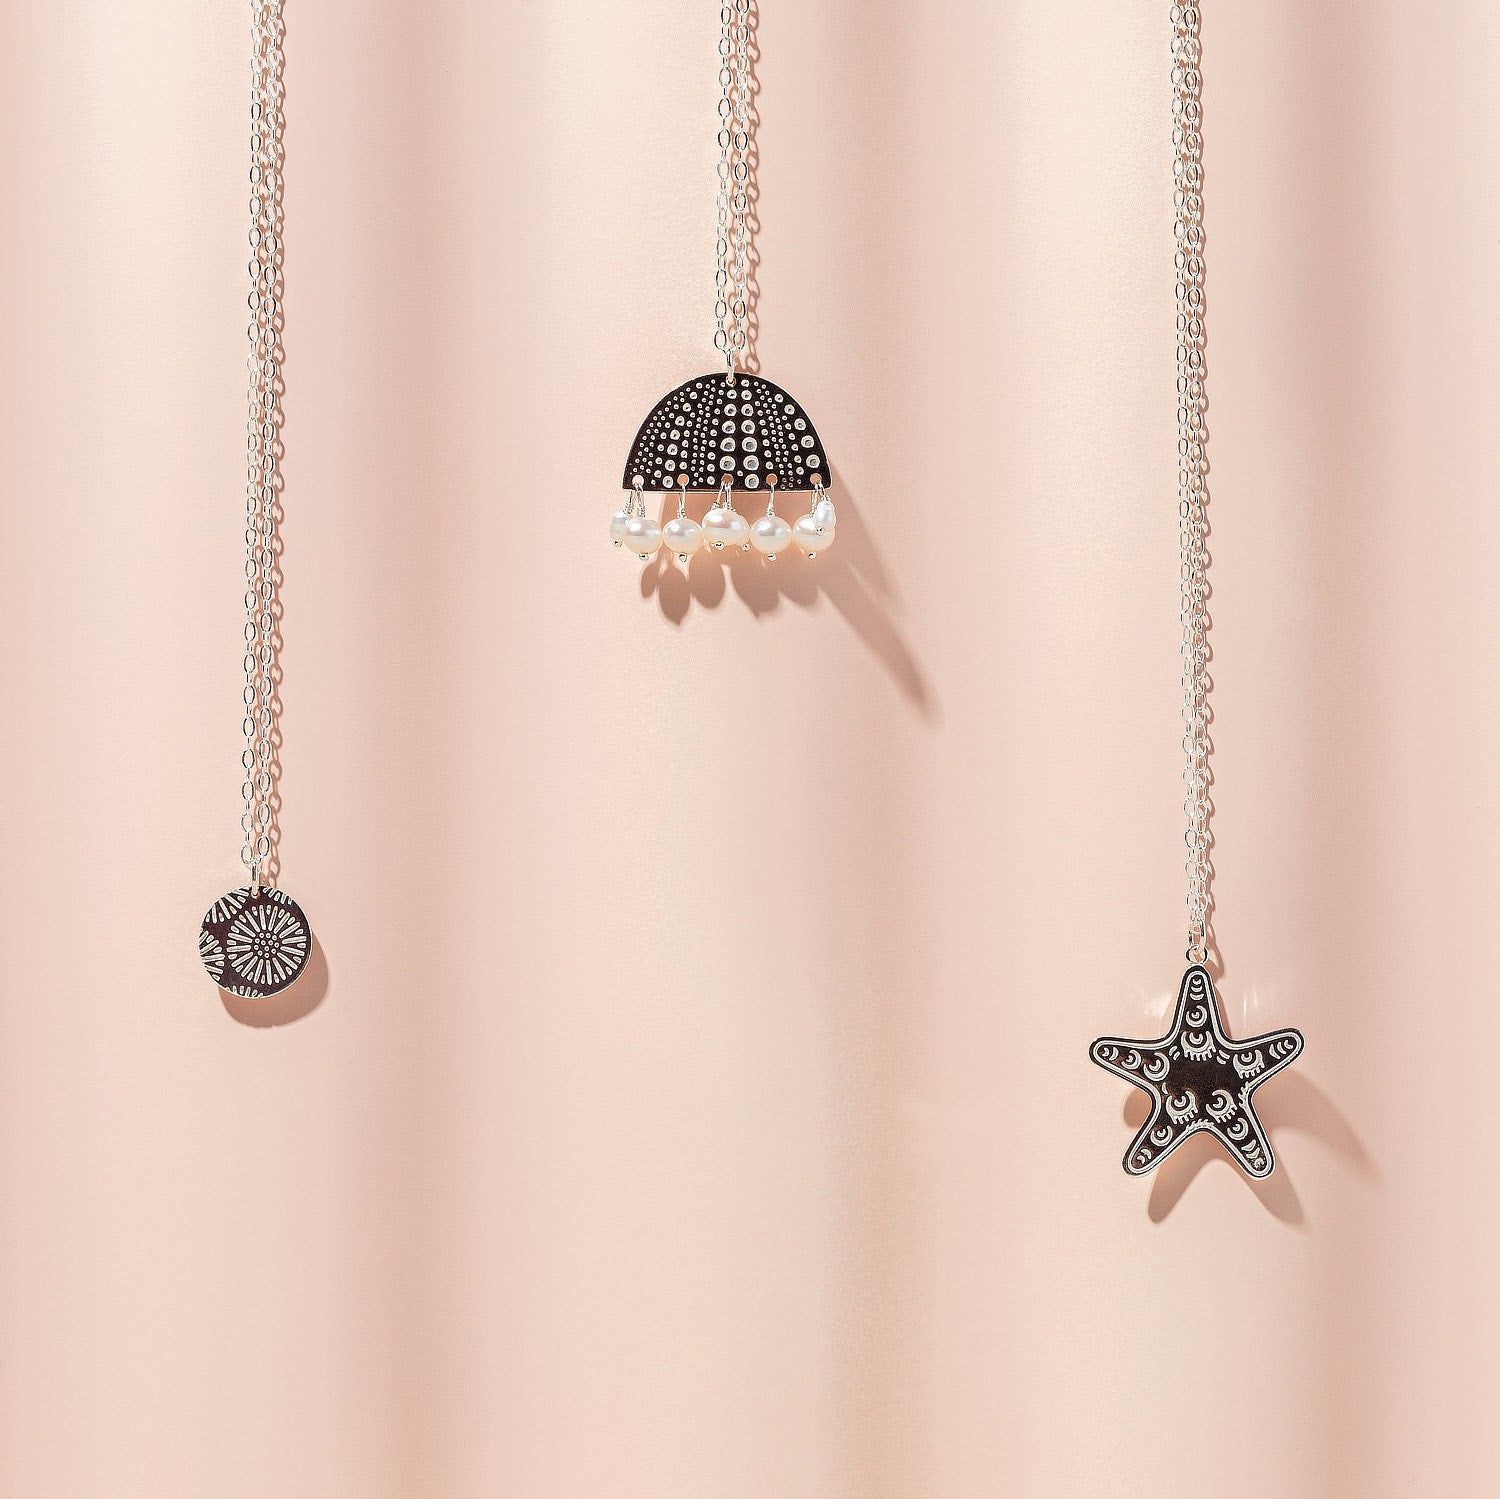 Sea urchin & pearls silver pendant necklace - Simone Walsh Jewellery Australia